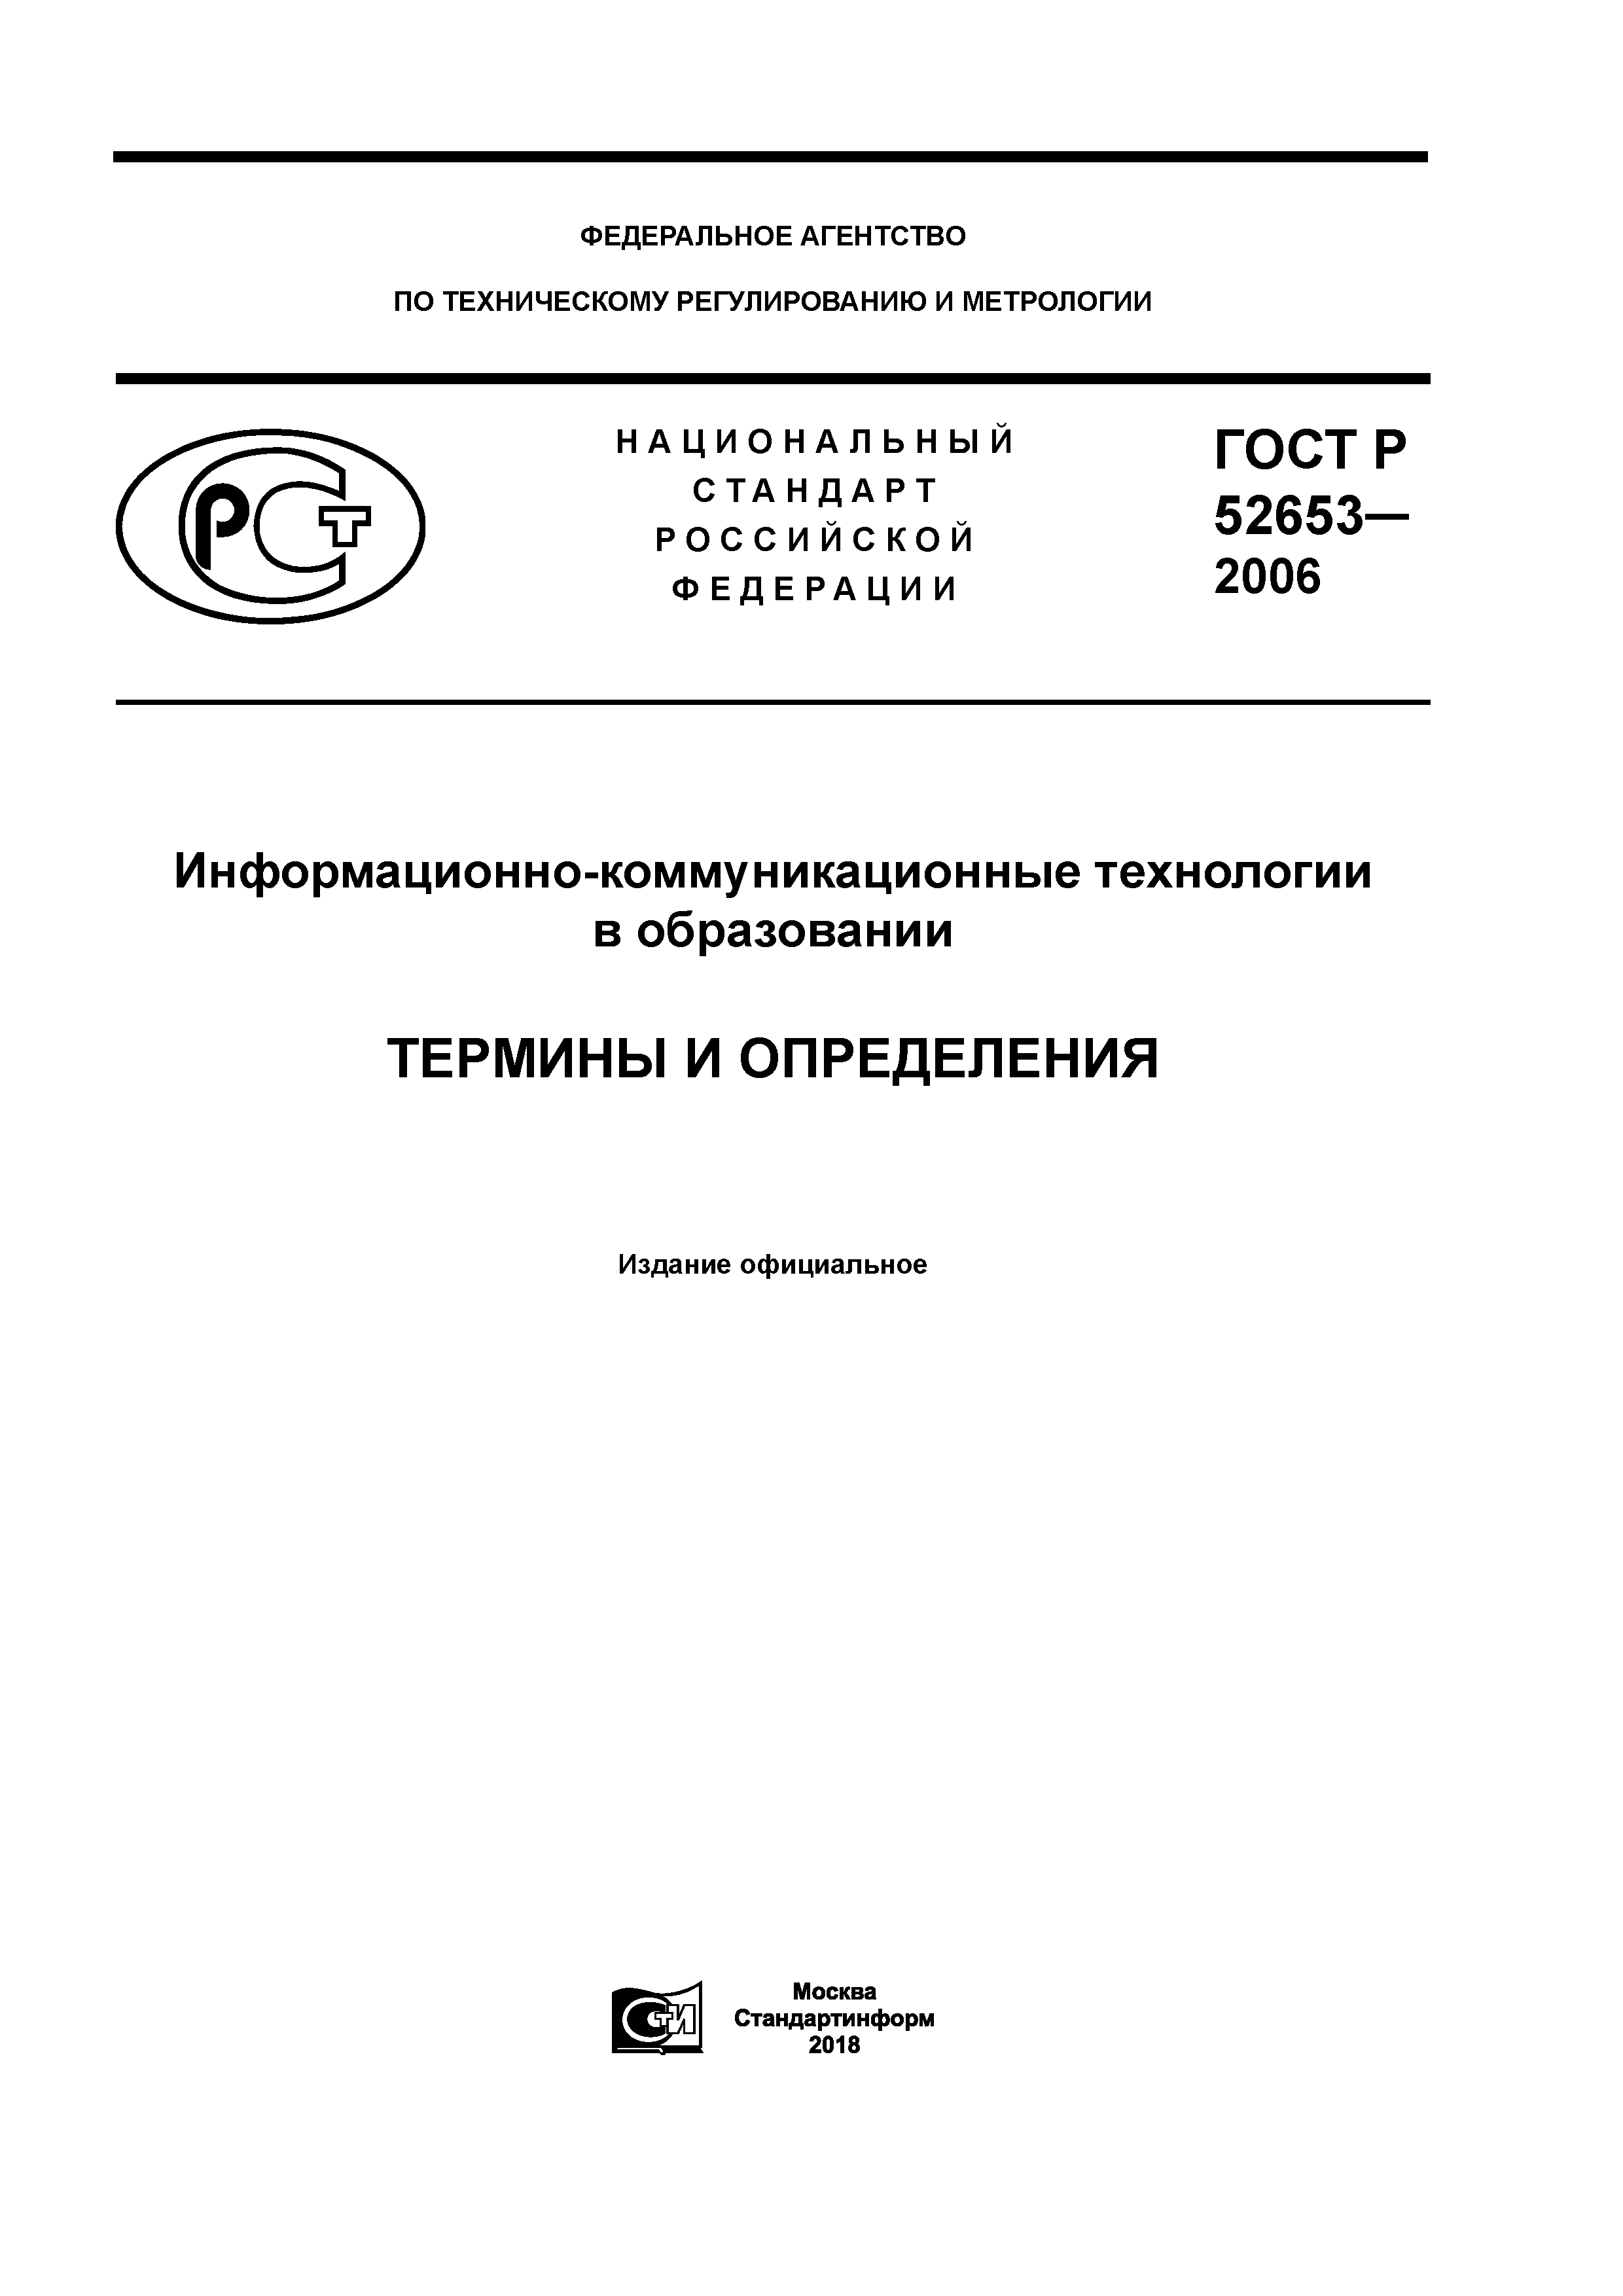 ГОСТ Р 52653-2006